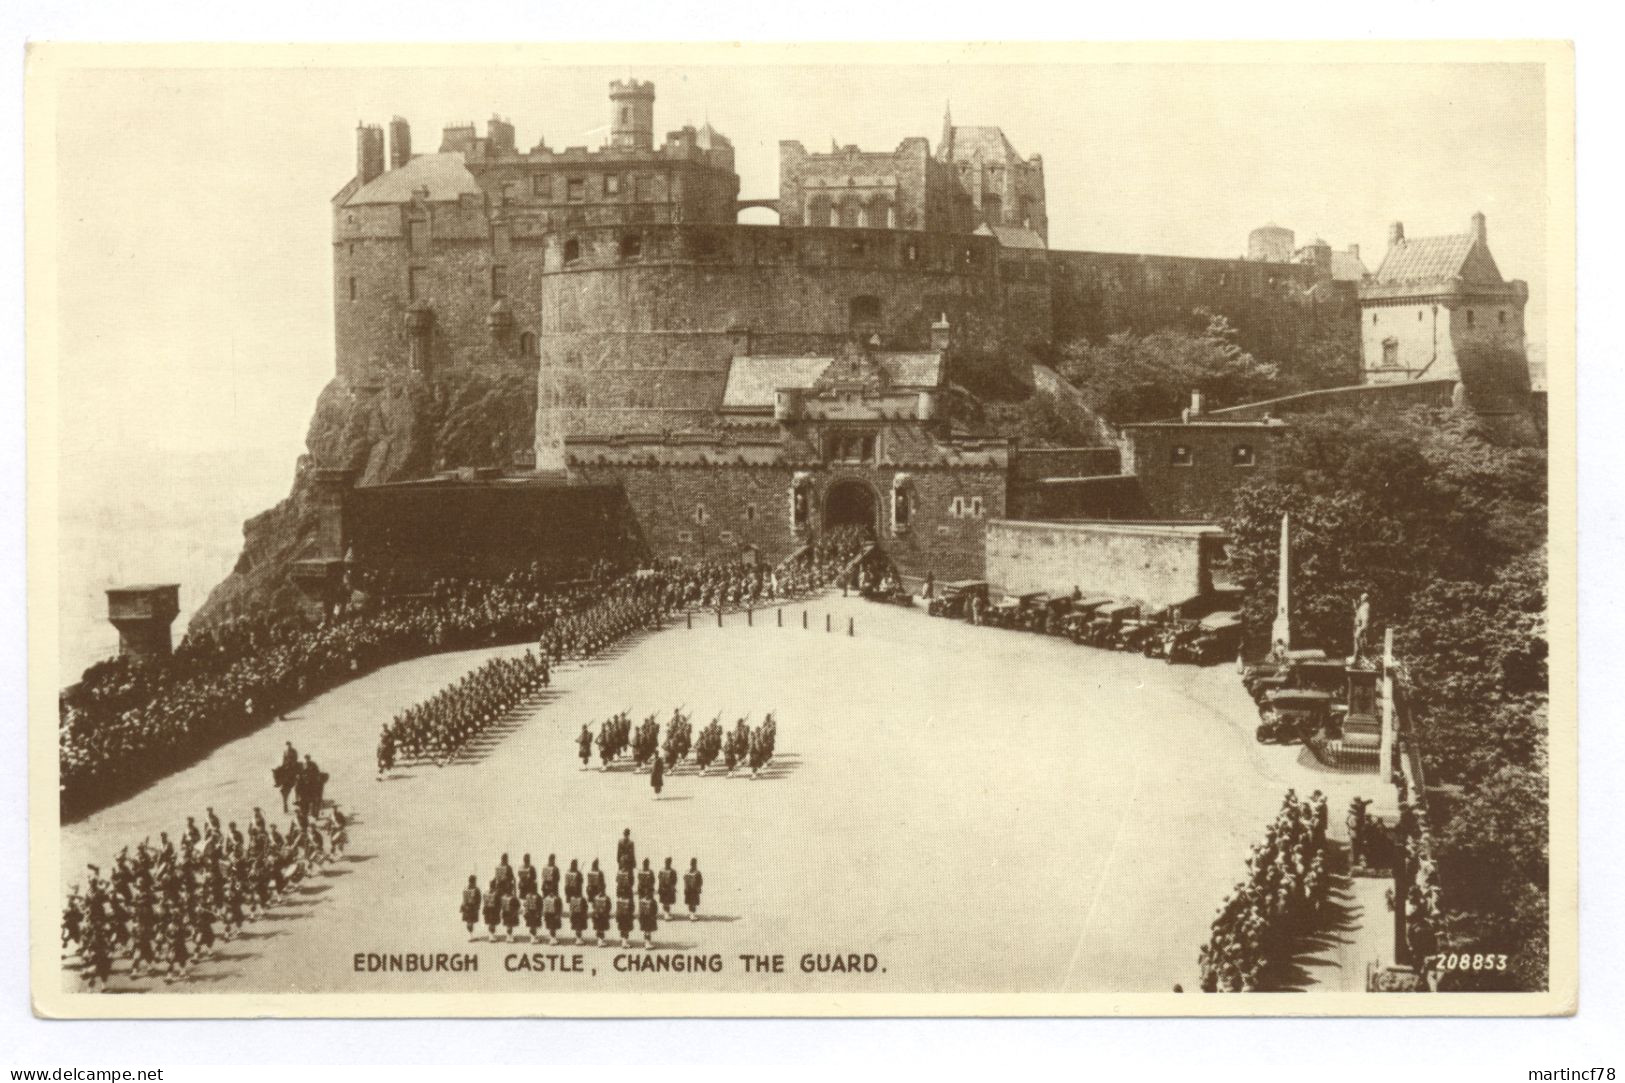 Schottland Edinburgh Castle, Changing The Guard 208853 - Midlothian/ Edinburgh